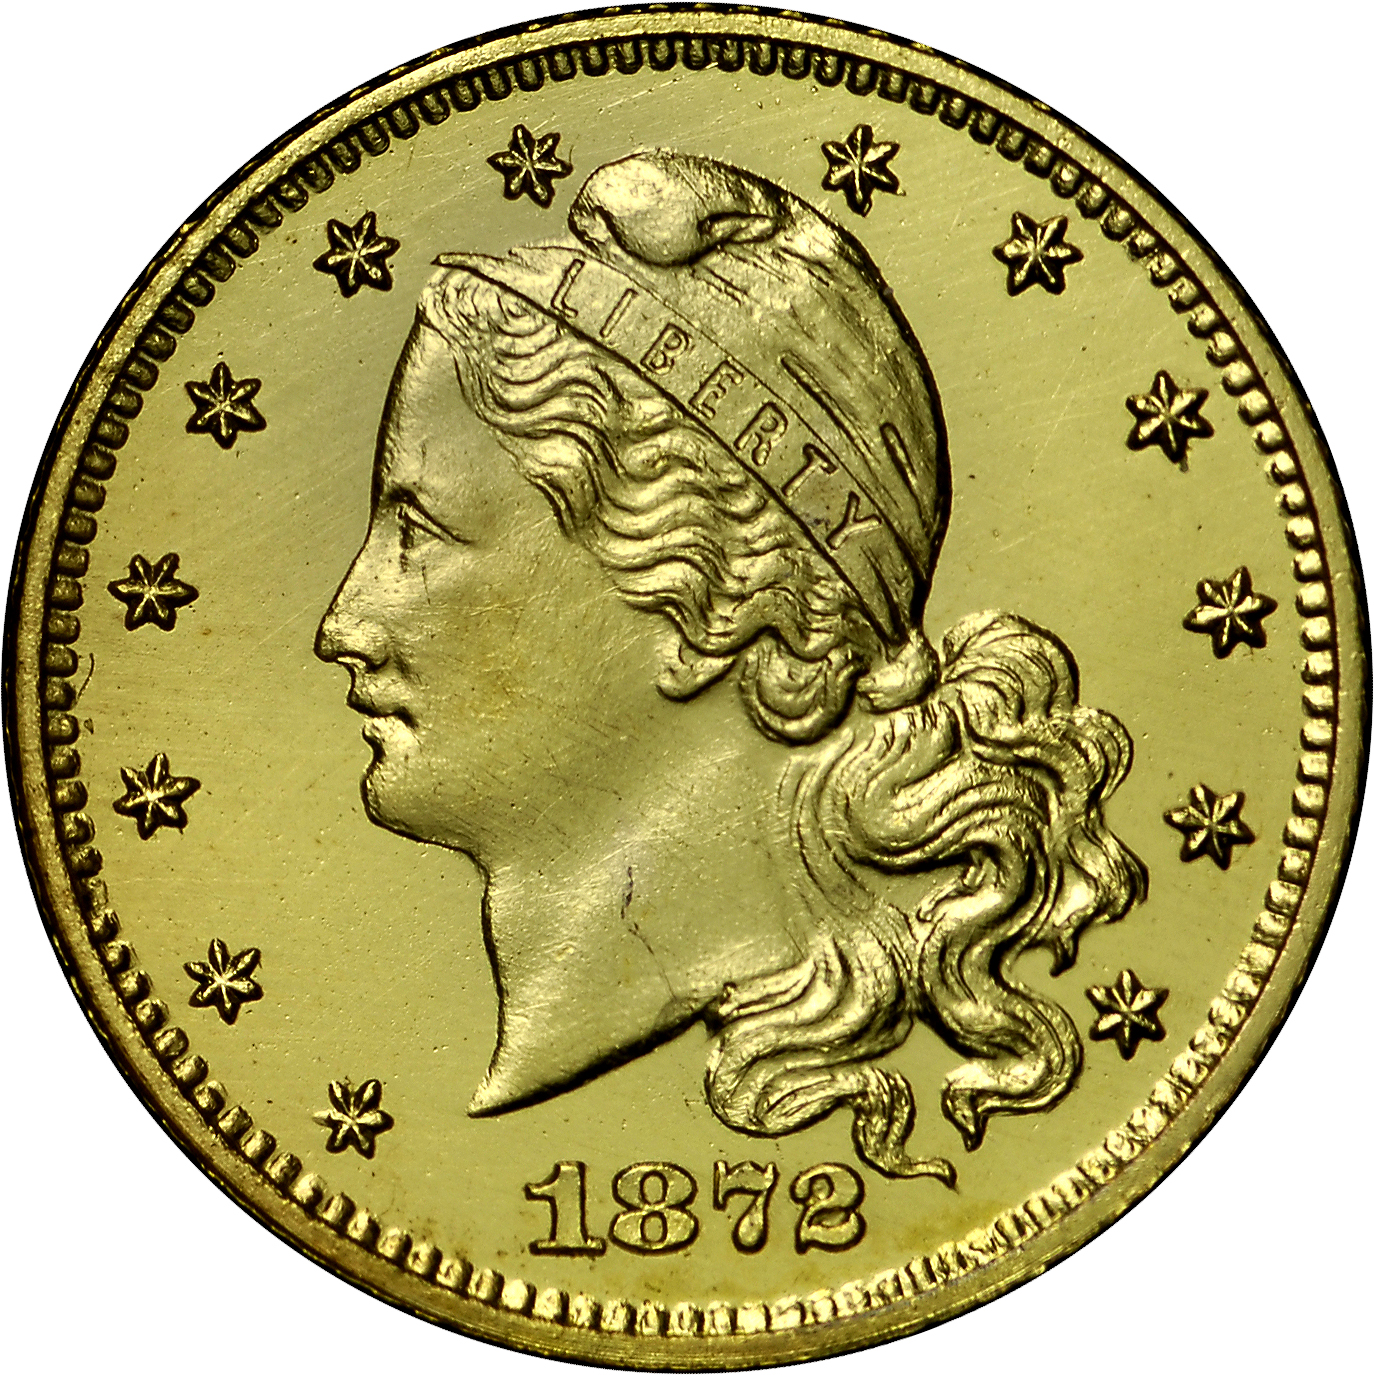 HBCC #6102 – 1872 Gold Dollar – Obverse